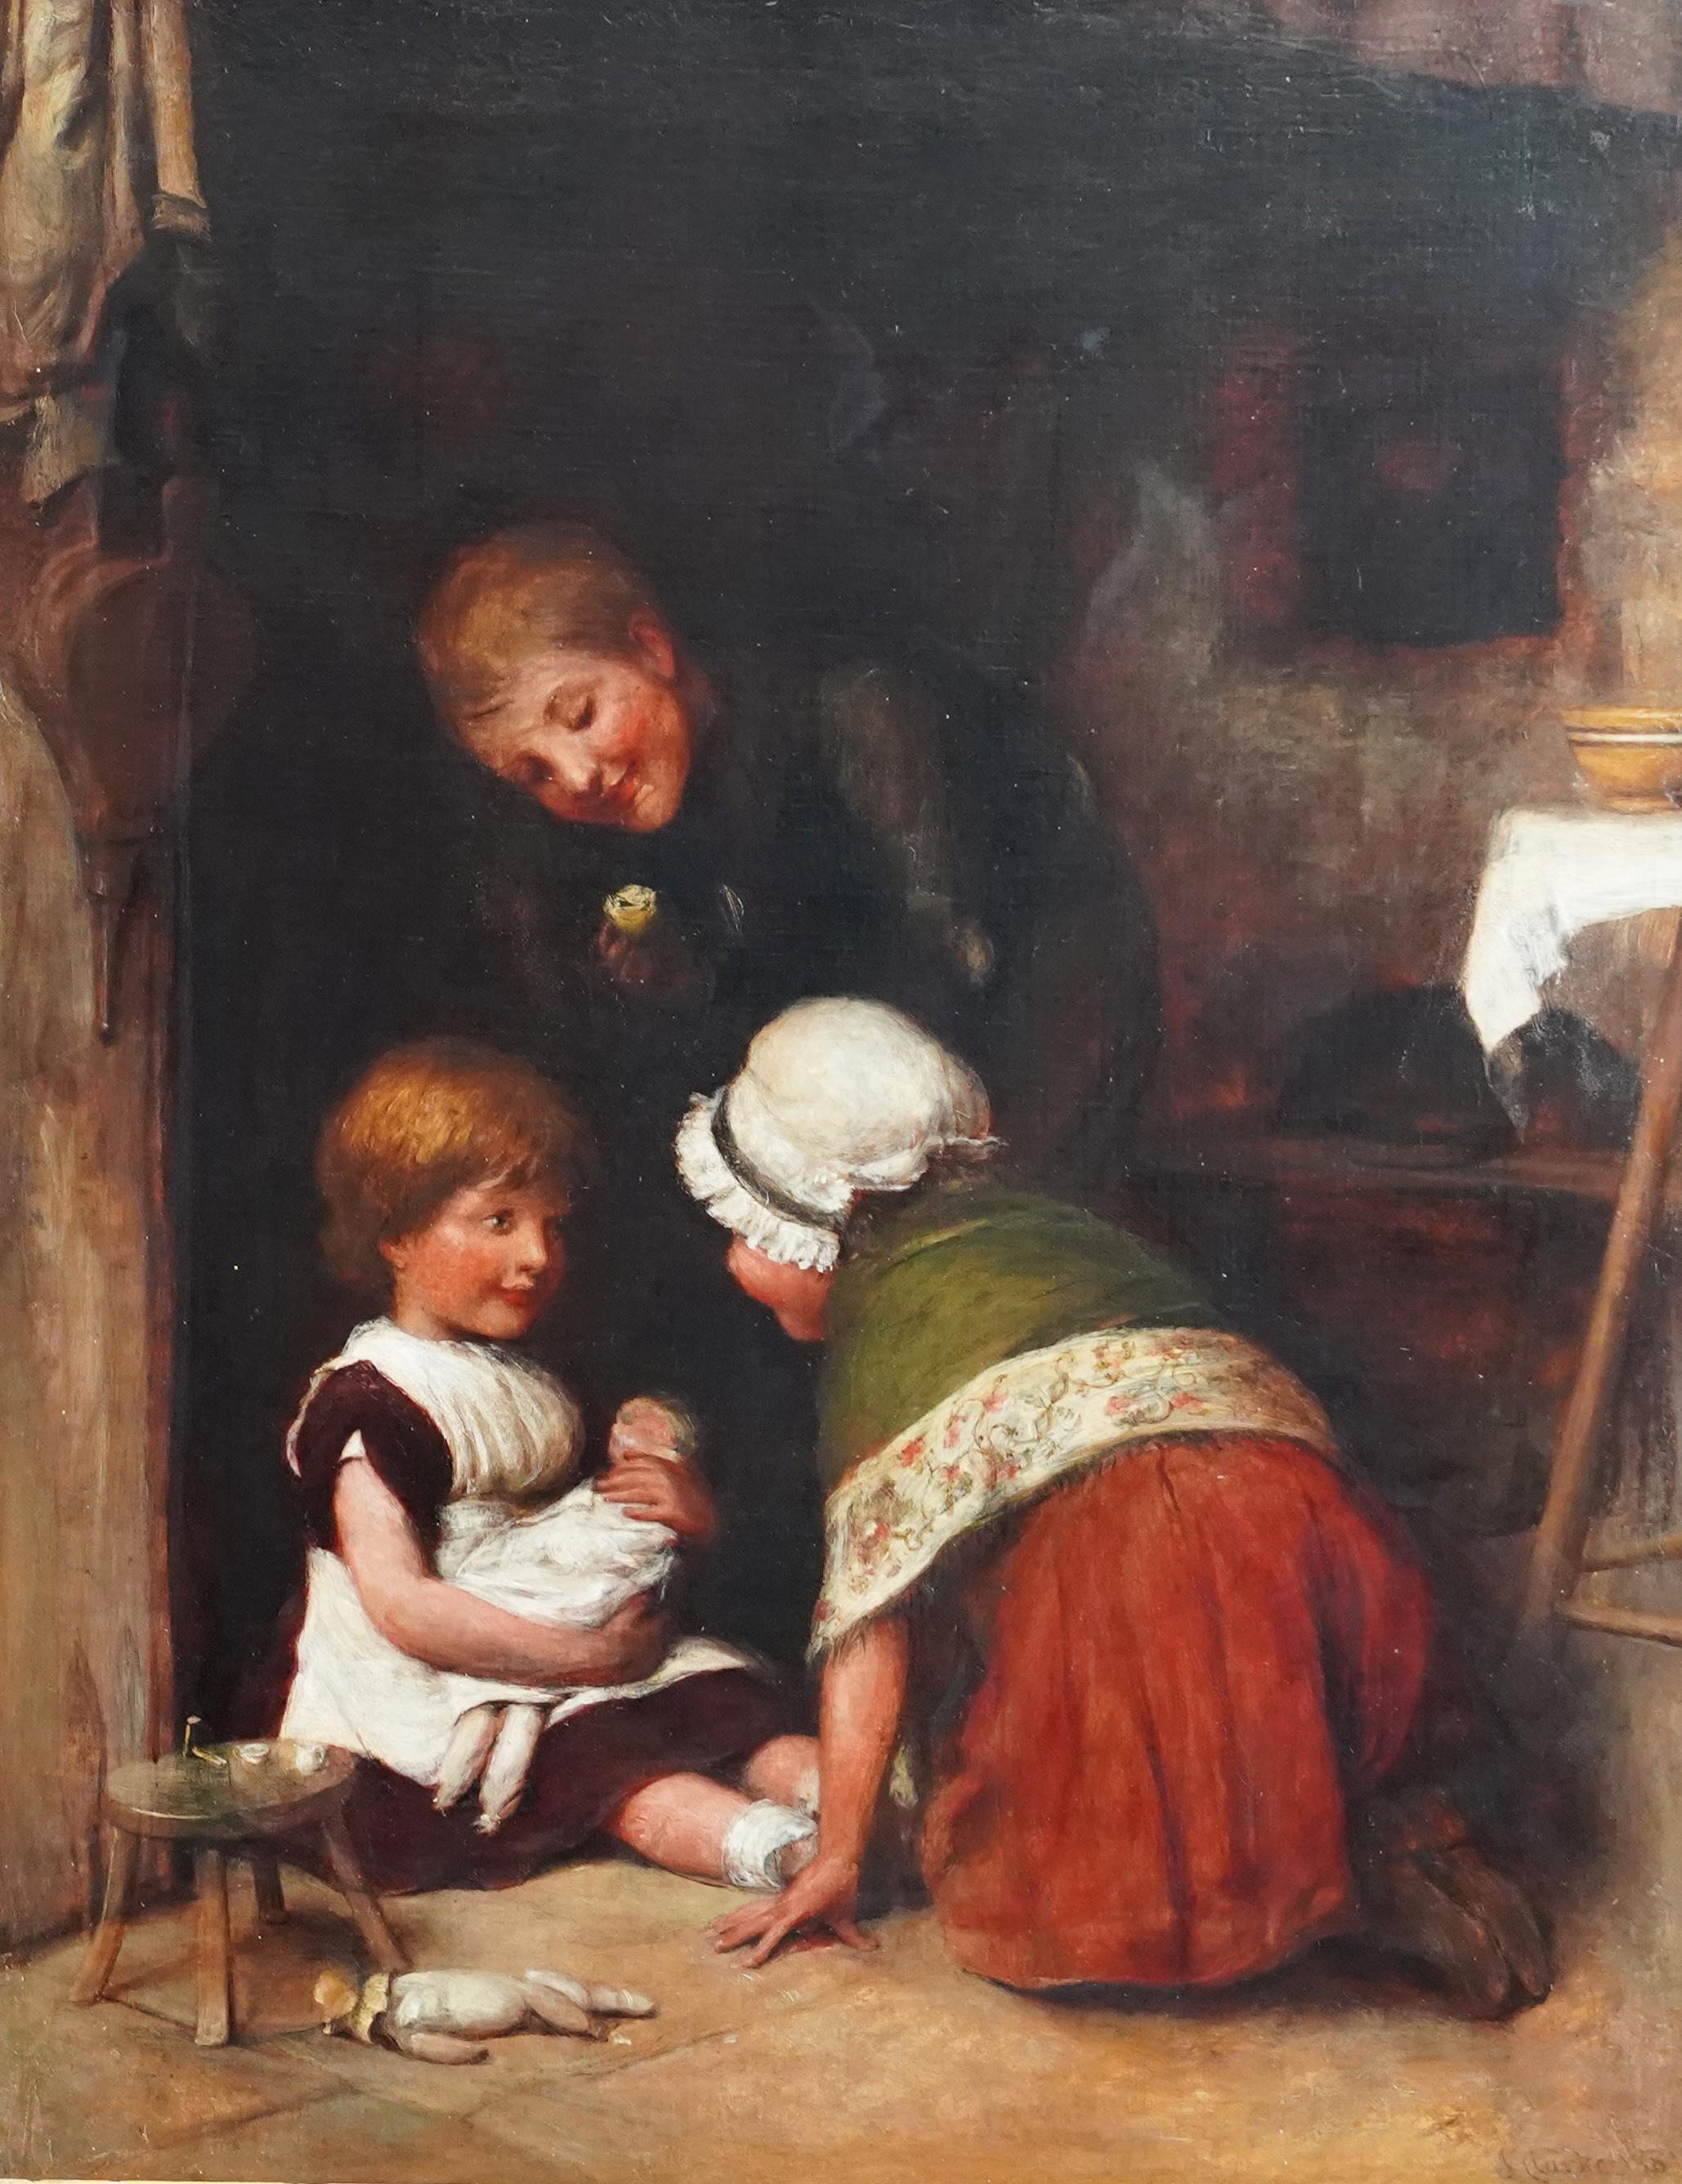 Portrait of Children at Play - British Victorian Genre art oil painting interior - Painting by Joseph Clark